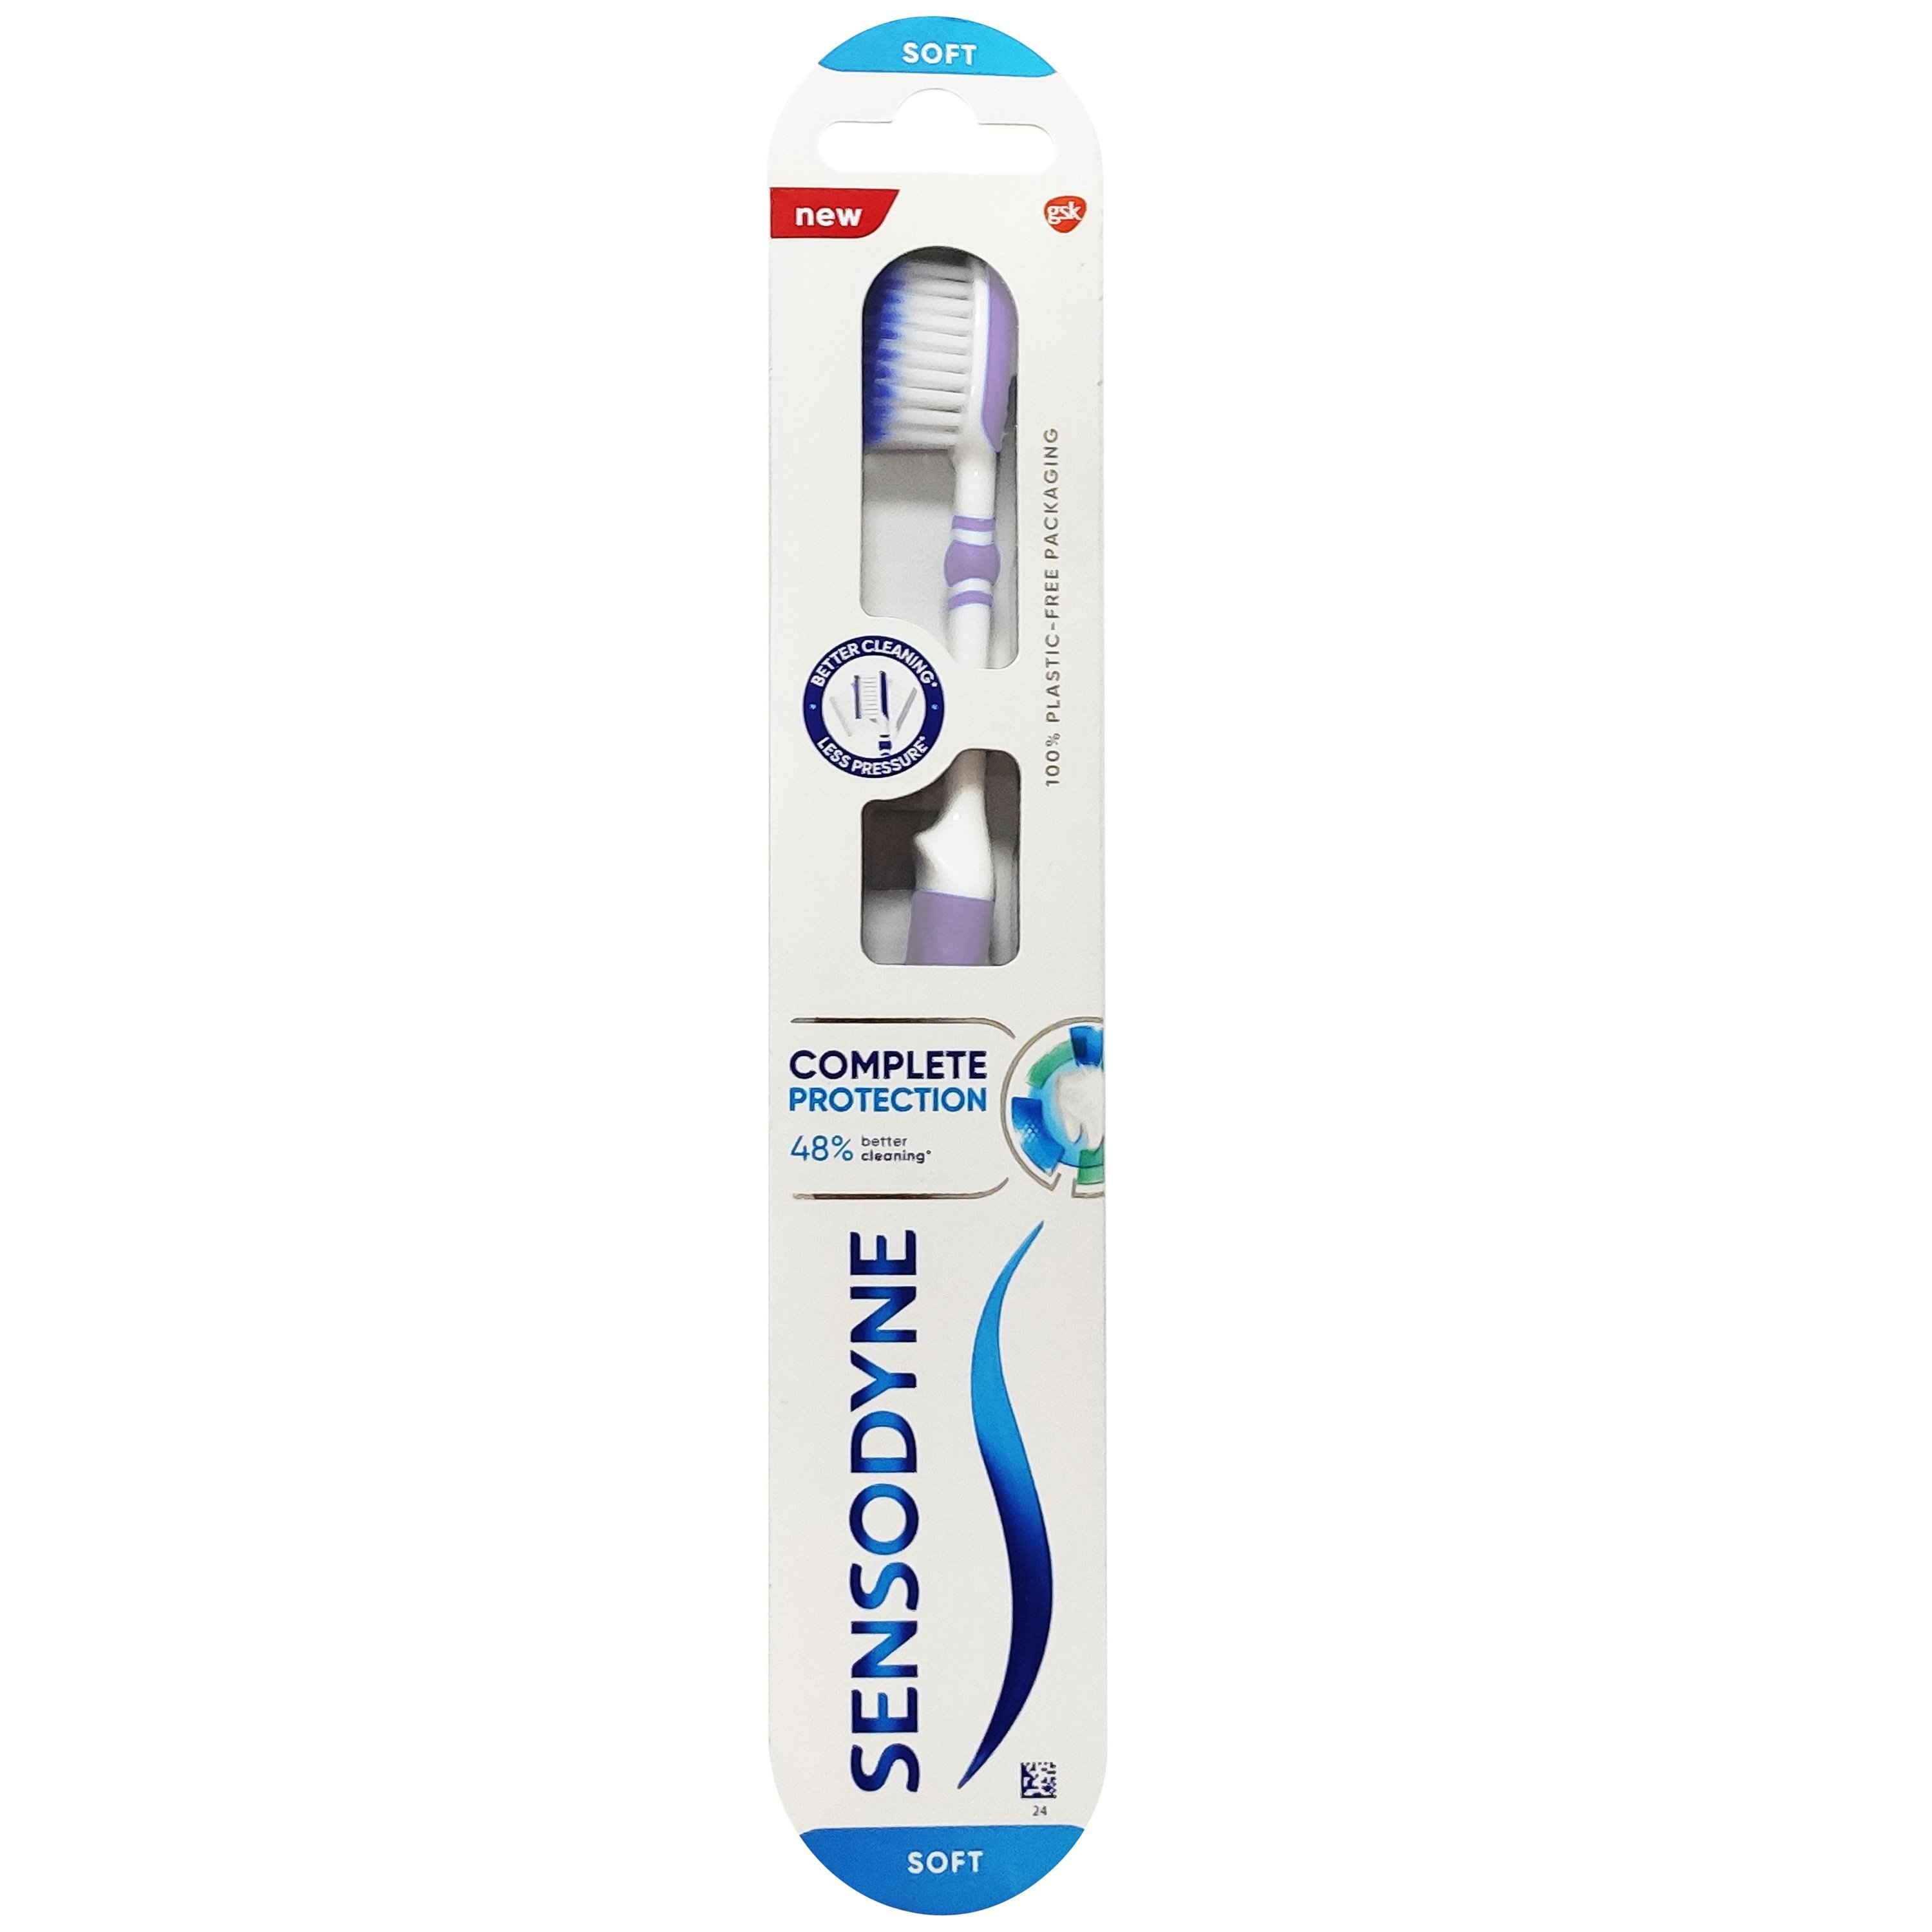 Sensodyne Toothbrush Complete Protection Soft Οδοντόβουρτσα για Άτομα με Ευαίσθητα Δόντια για Καλύτερο Καθαρισμό 1 Τεμάχιο – Μωβ